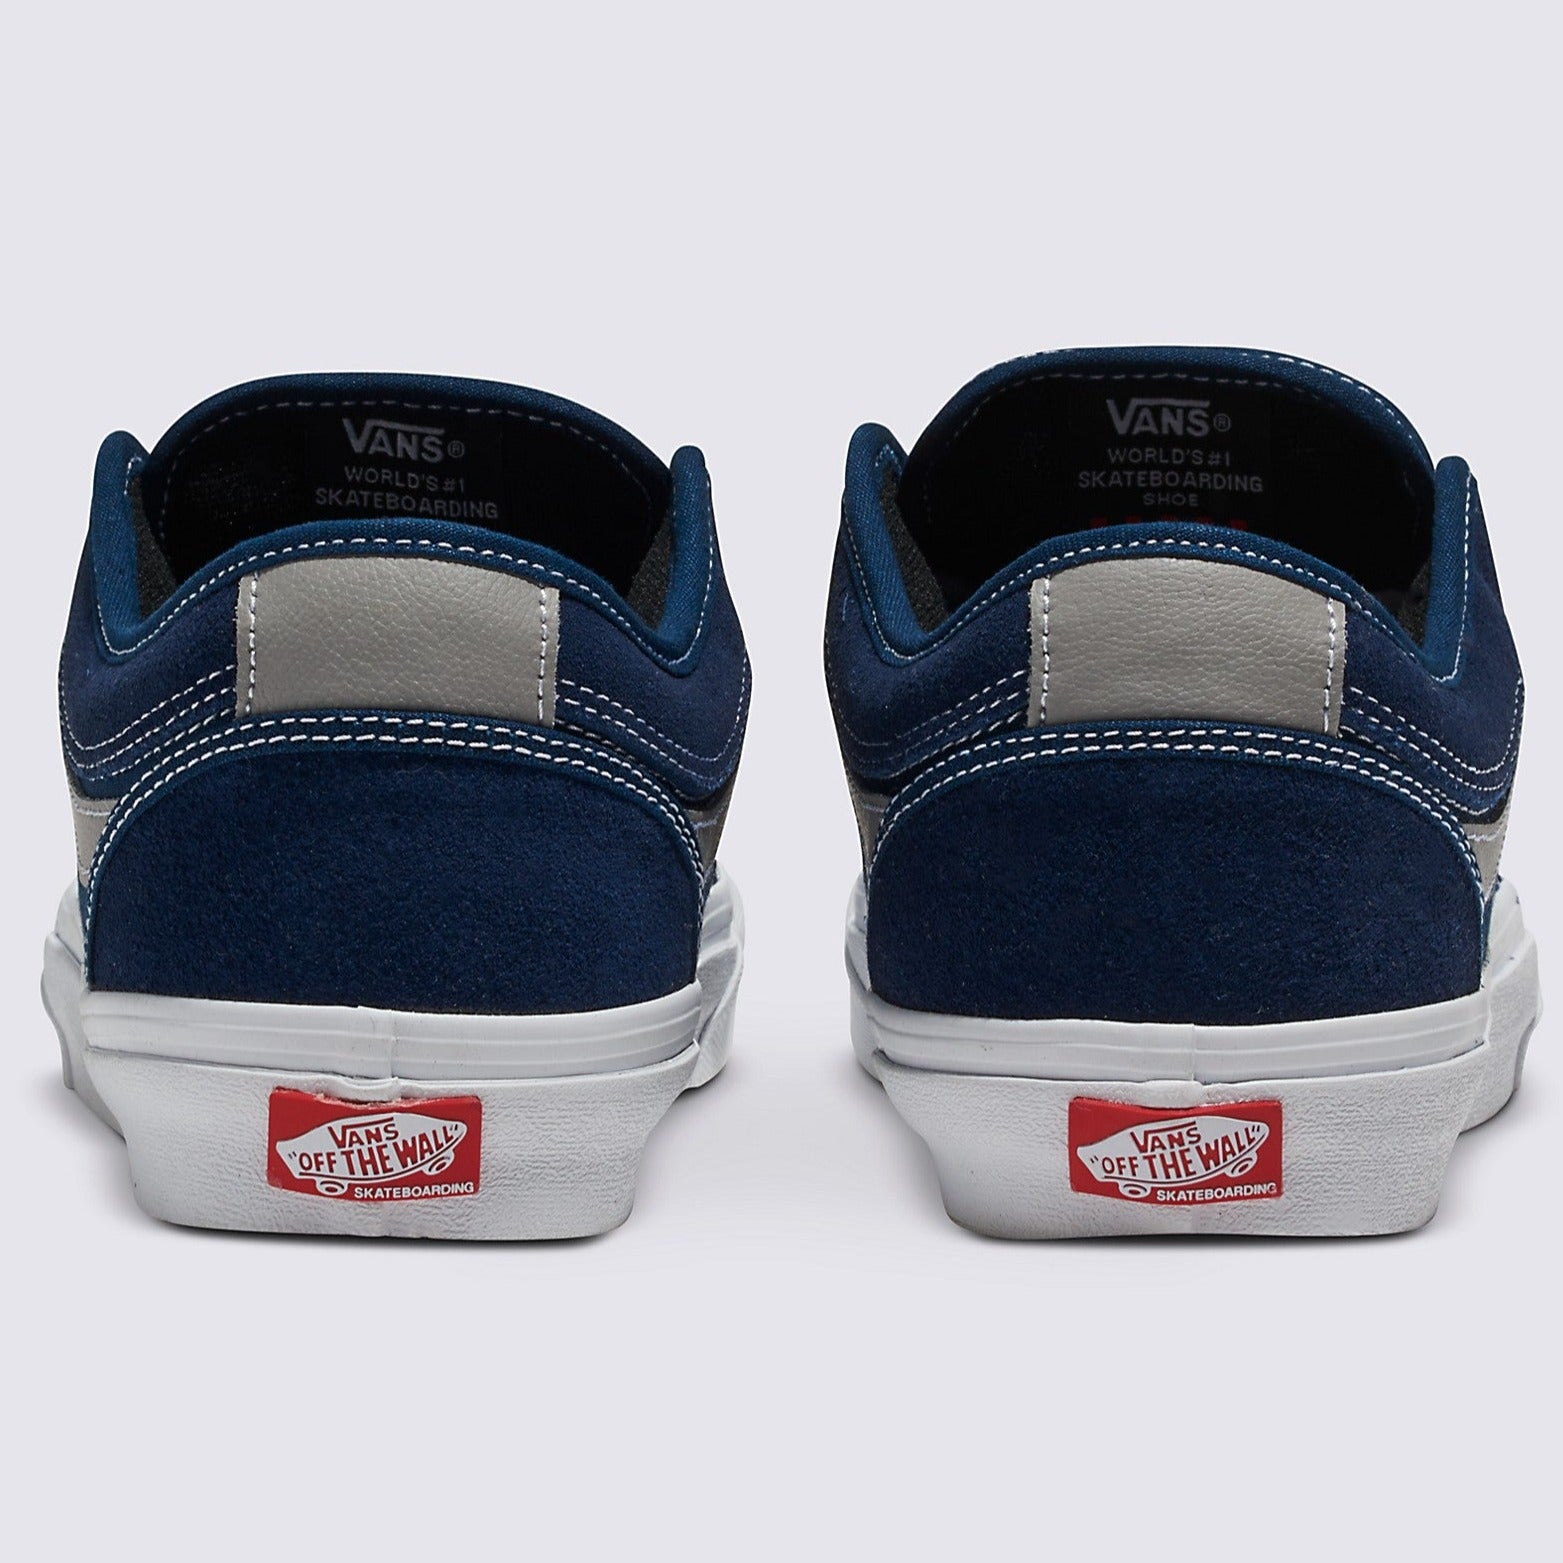 Navy/Grey Chukka Low Sidestripe Vans Skate Shoe Back